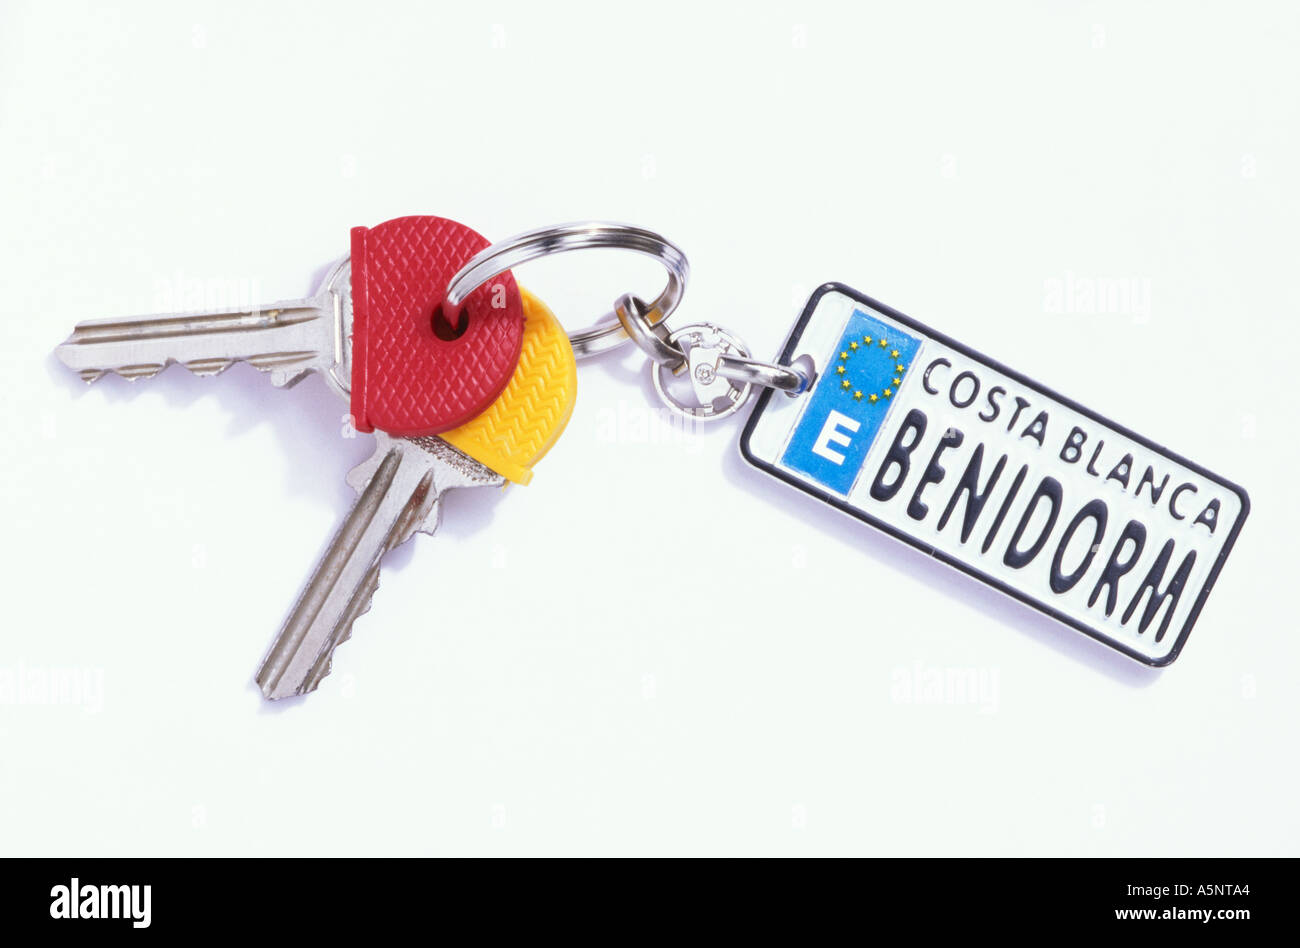 Keys on a Benidorm key ring Stock Photo